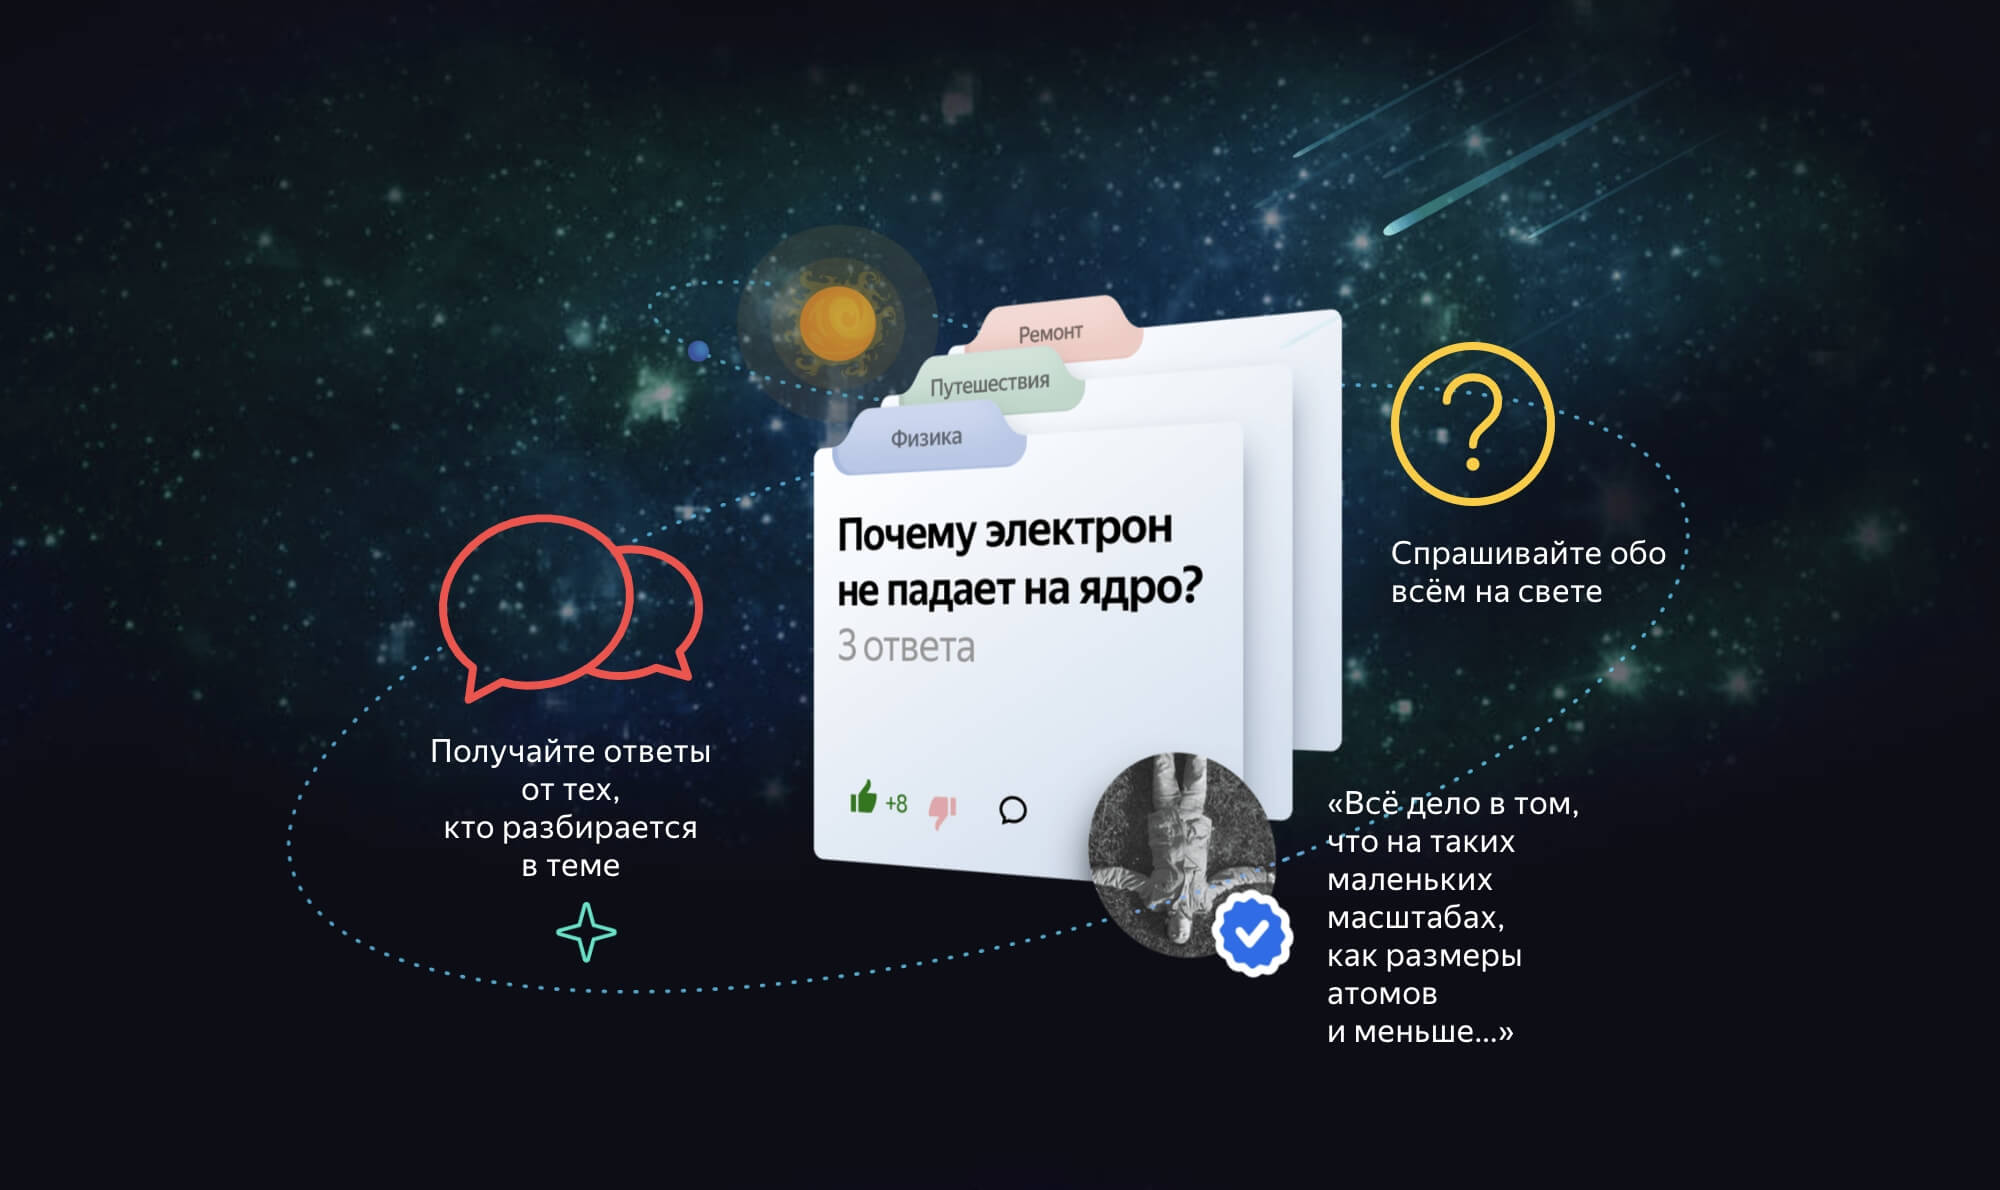 Yandex Answers